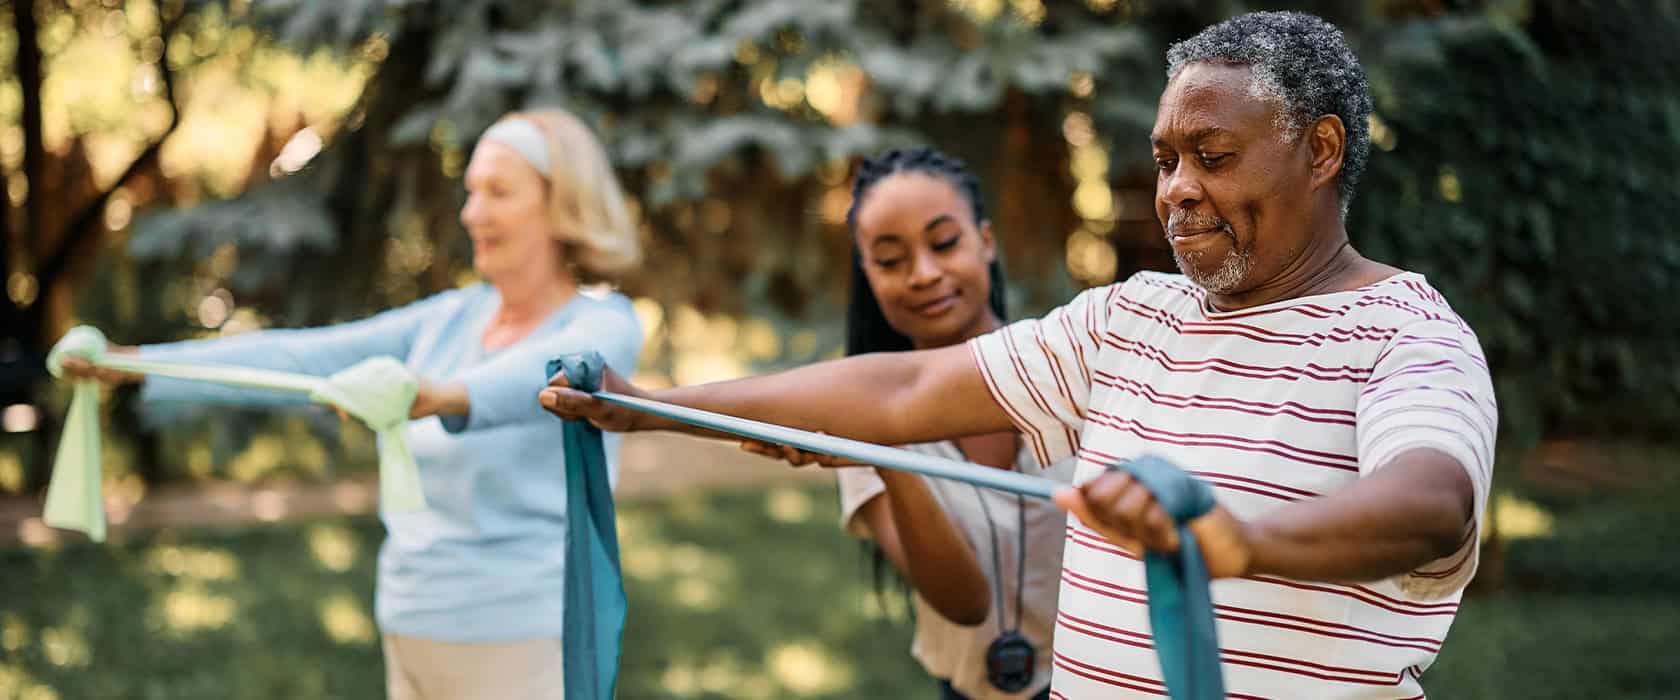 senior longevity - physical activity 